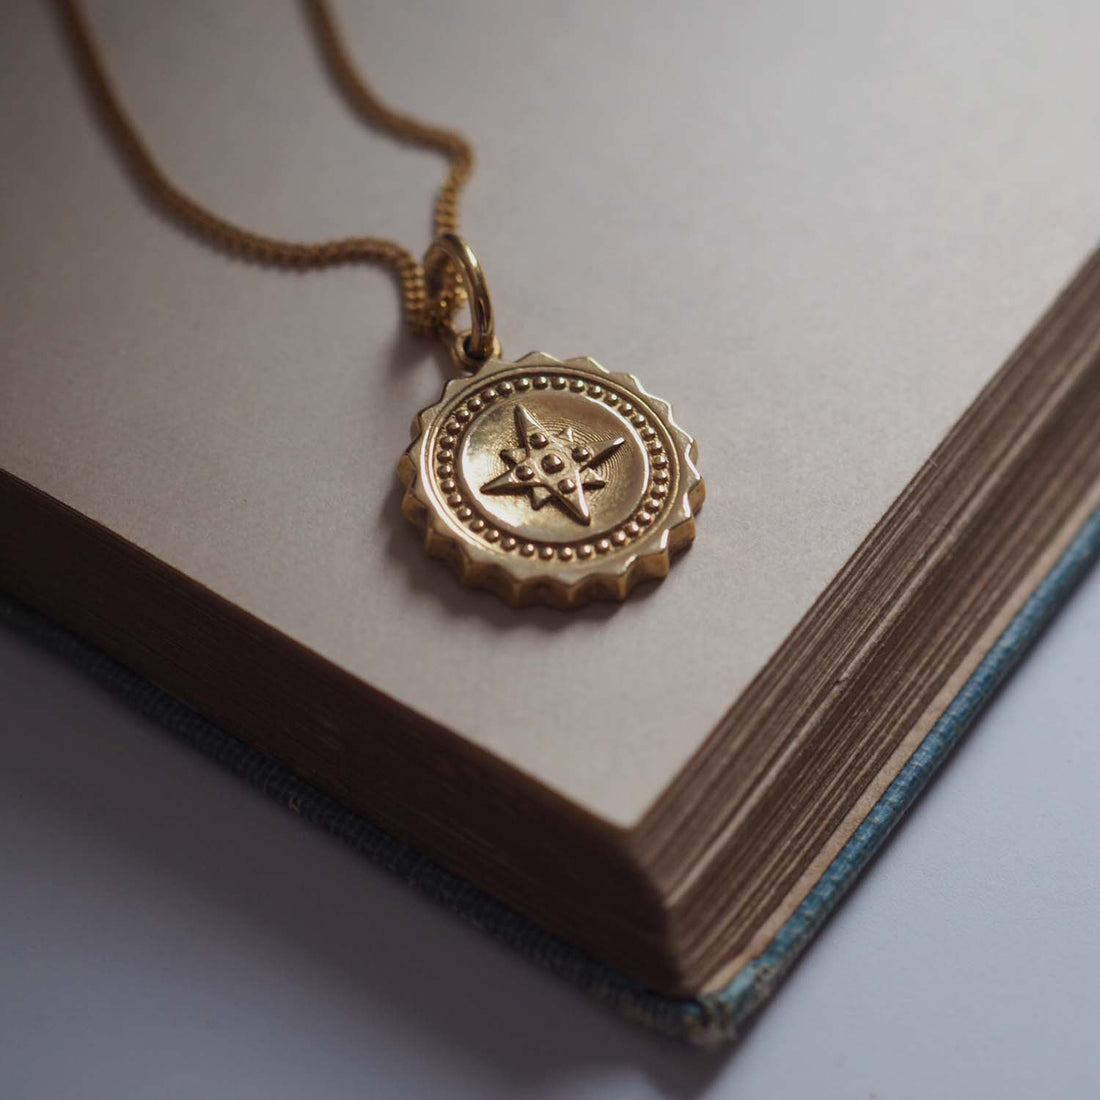 Bianca Jones Compass Midi Pendant in Silver or Gold Vermeil - Navigational jewellery